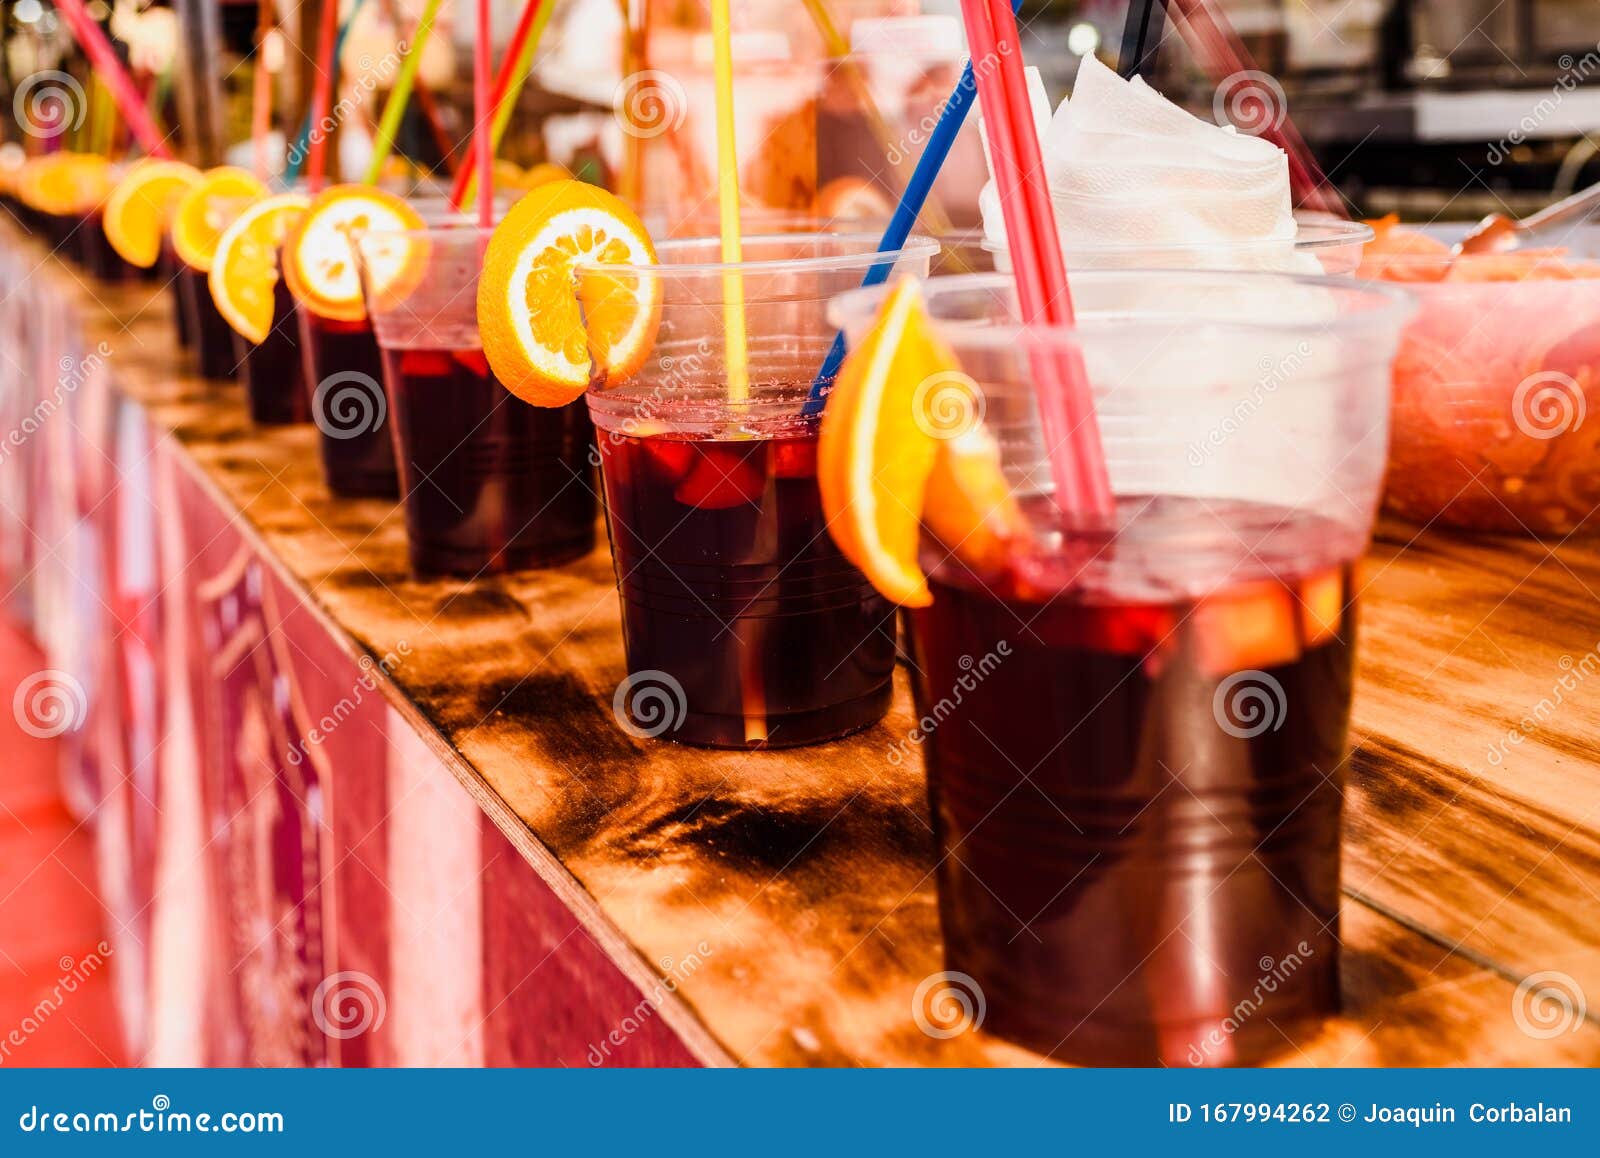 https://thumbs.dreamstime.com/z/plastic-cups-refreshing-drinks-alcohol-bar-summer-festival-spain-plastic-cups-refreshing-drinks-167994262.jpg